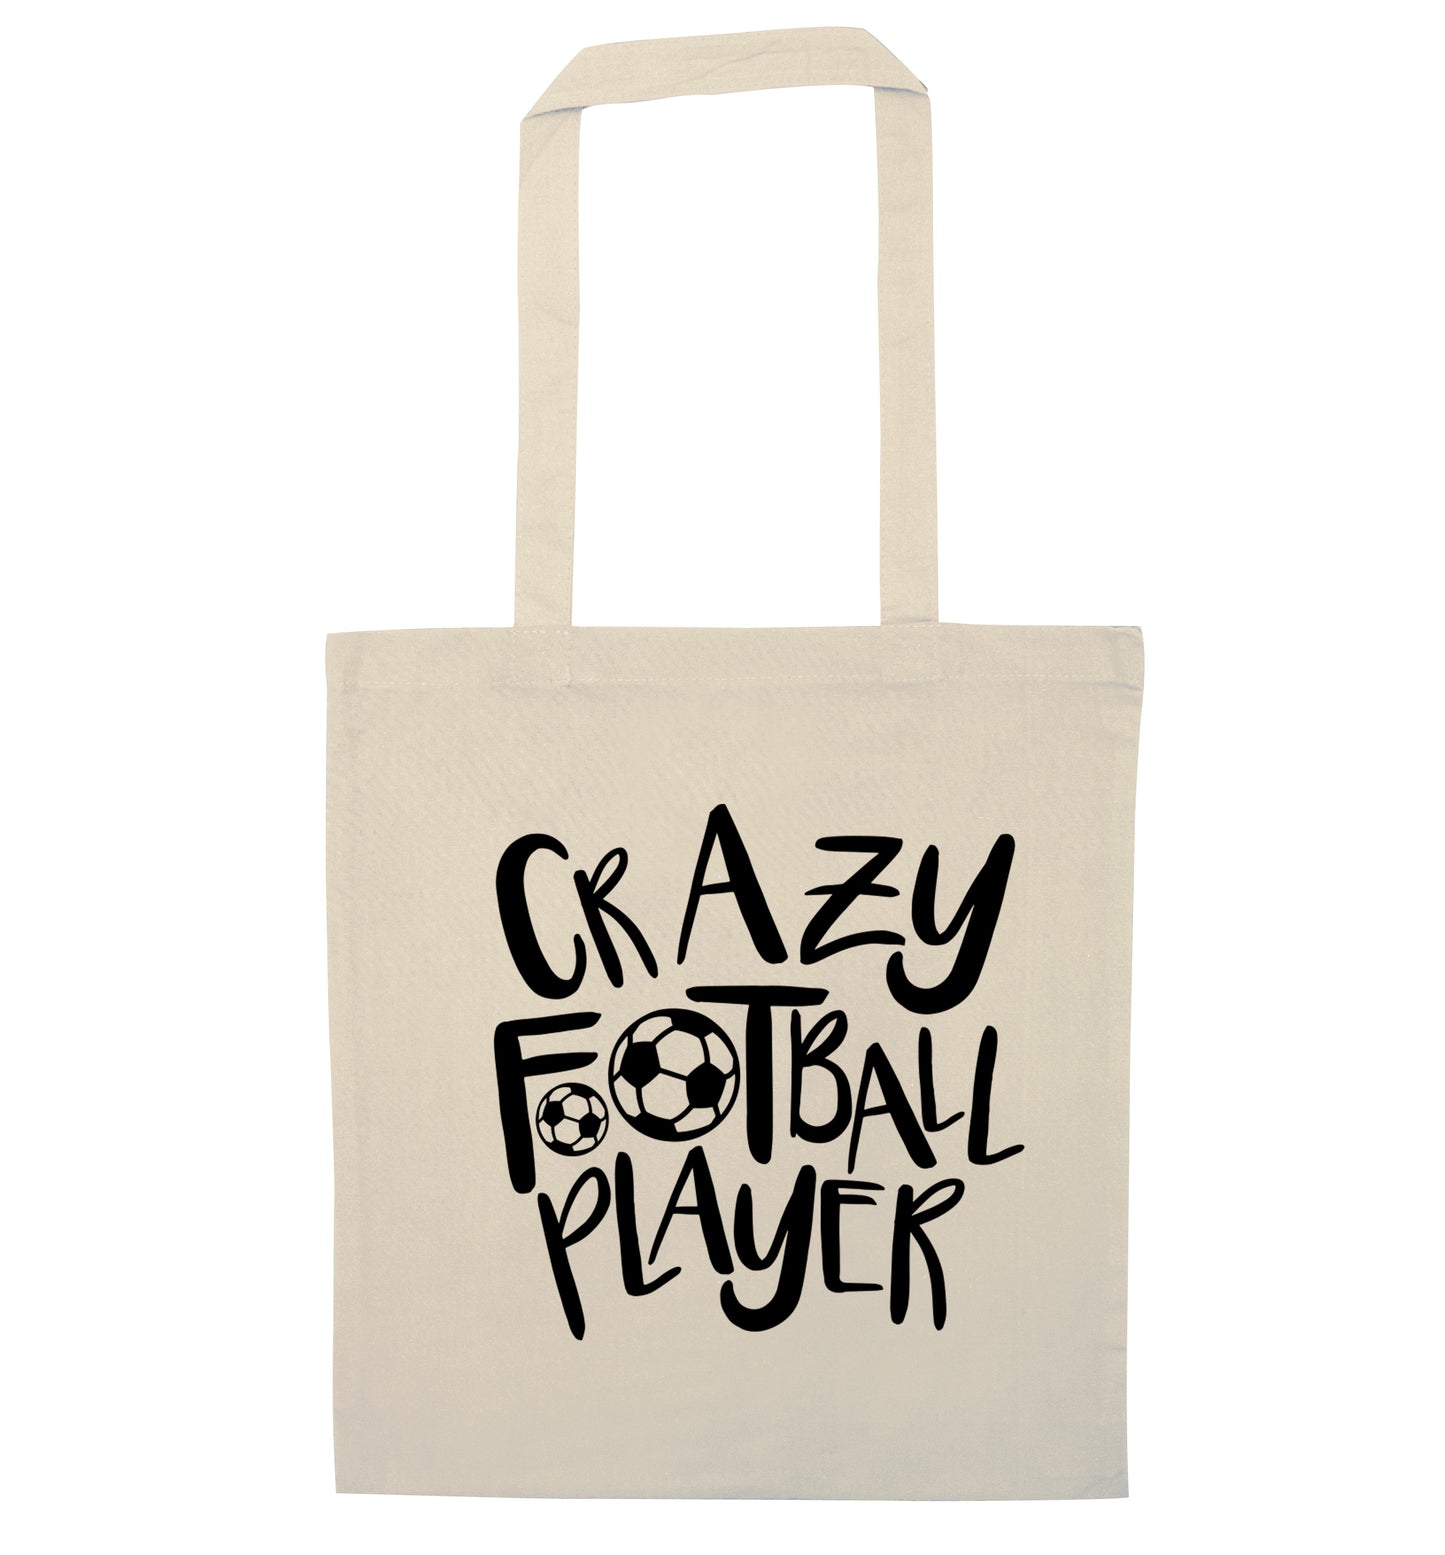 Crazy football player natural tote bag